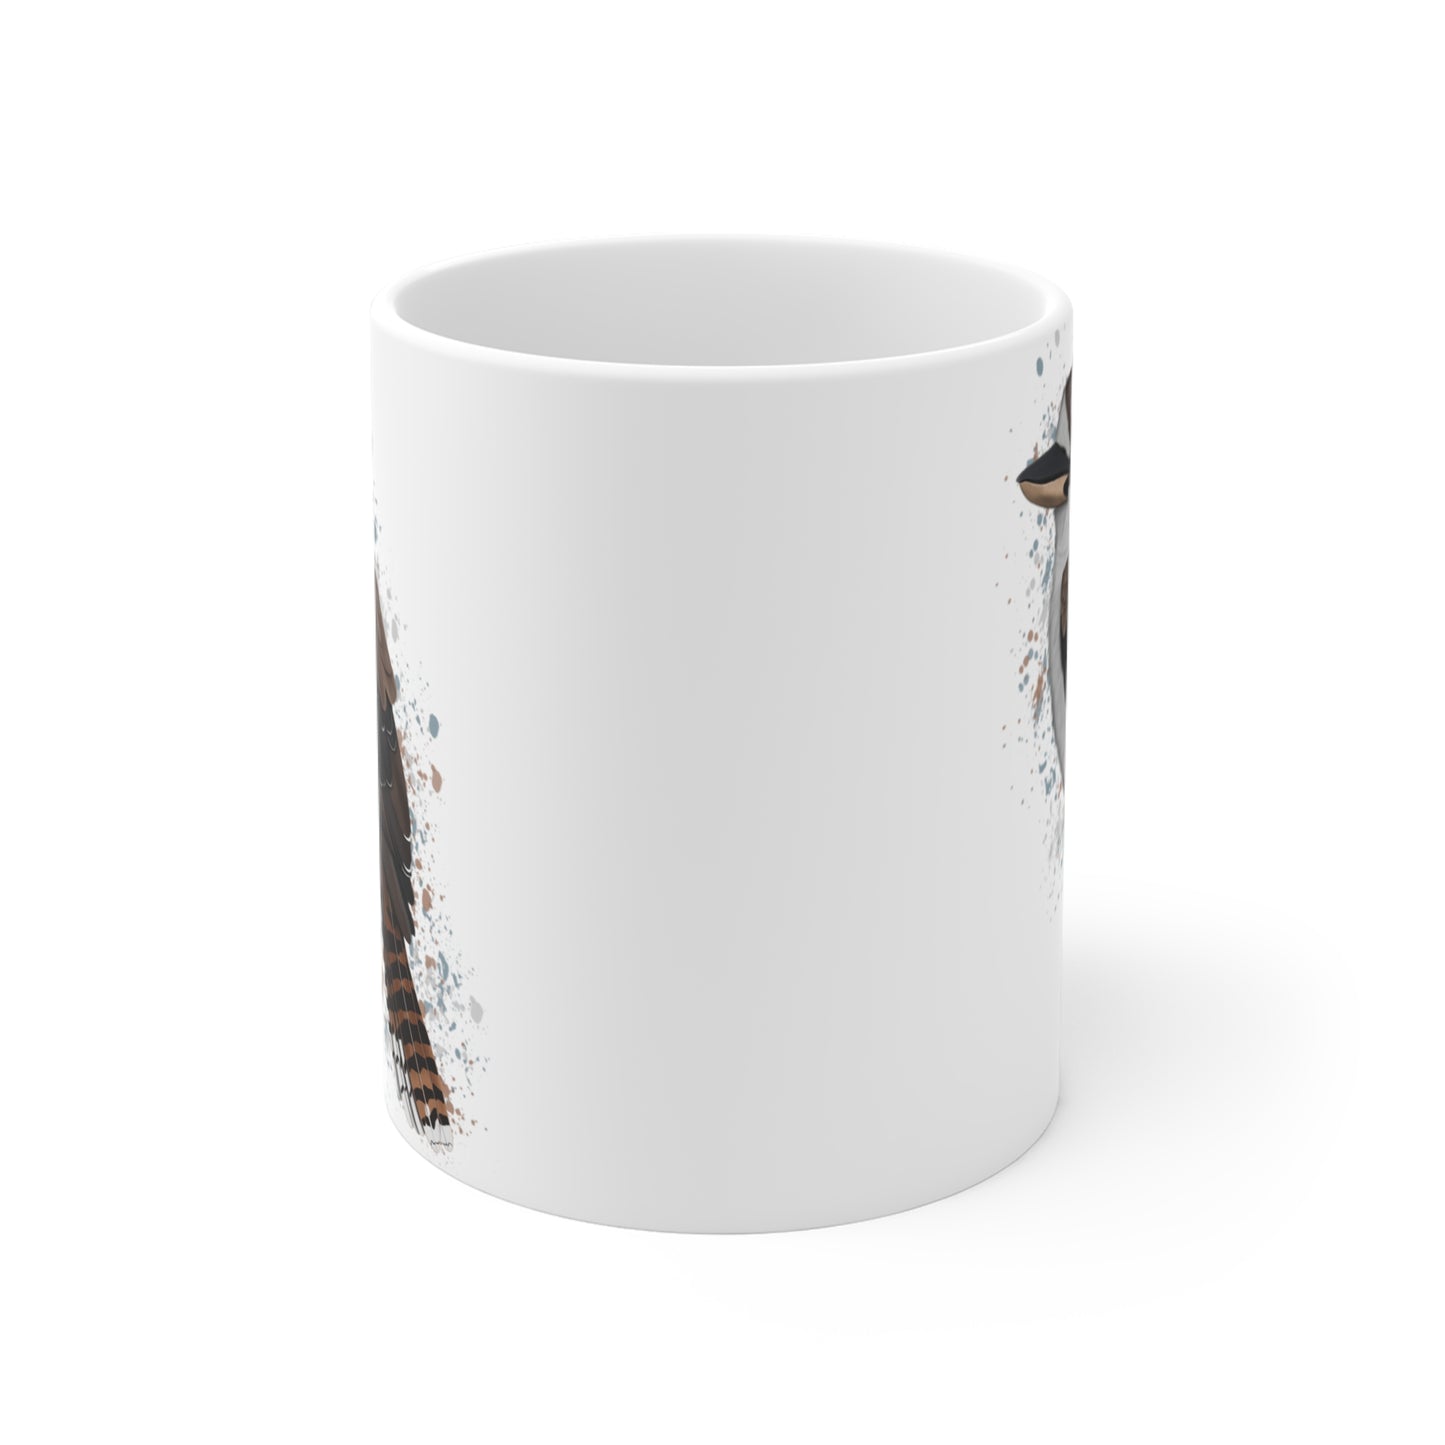 Kookaburra Bird Ceramic Mug 11oz White